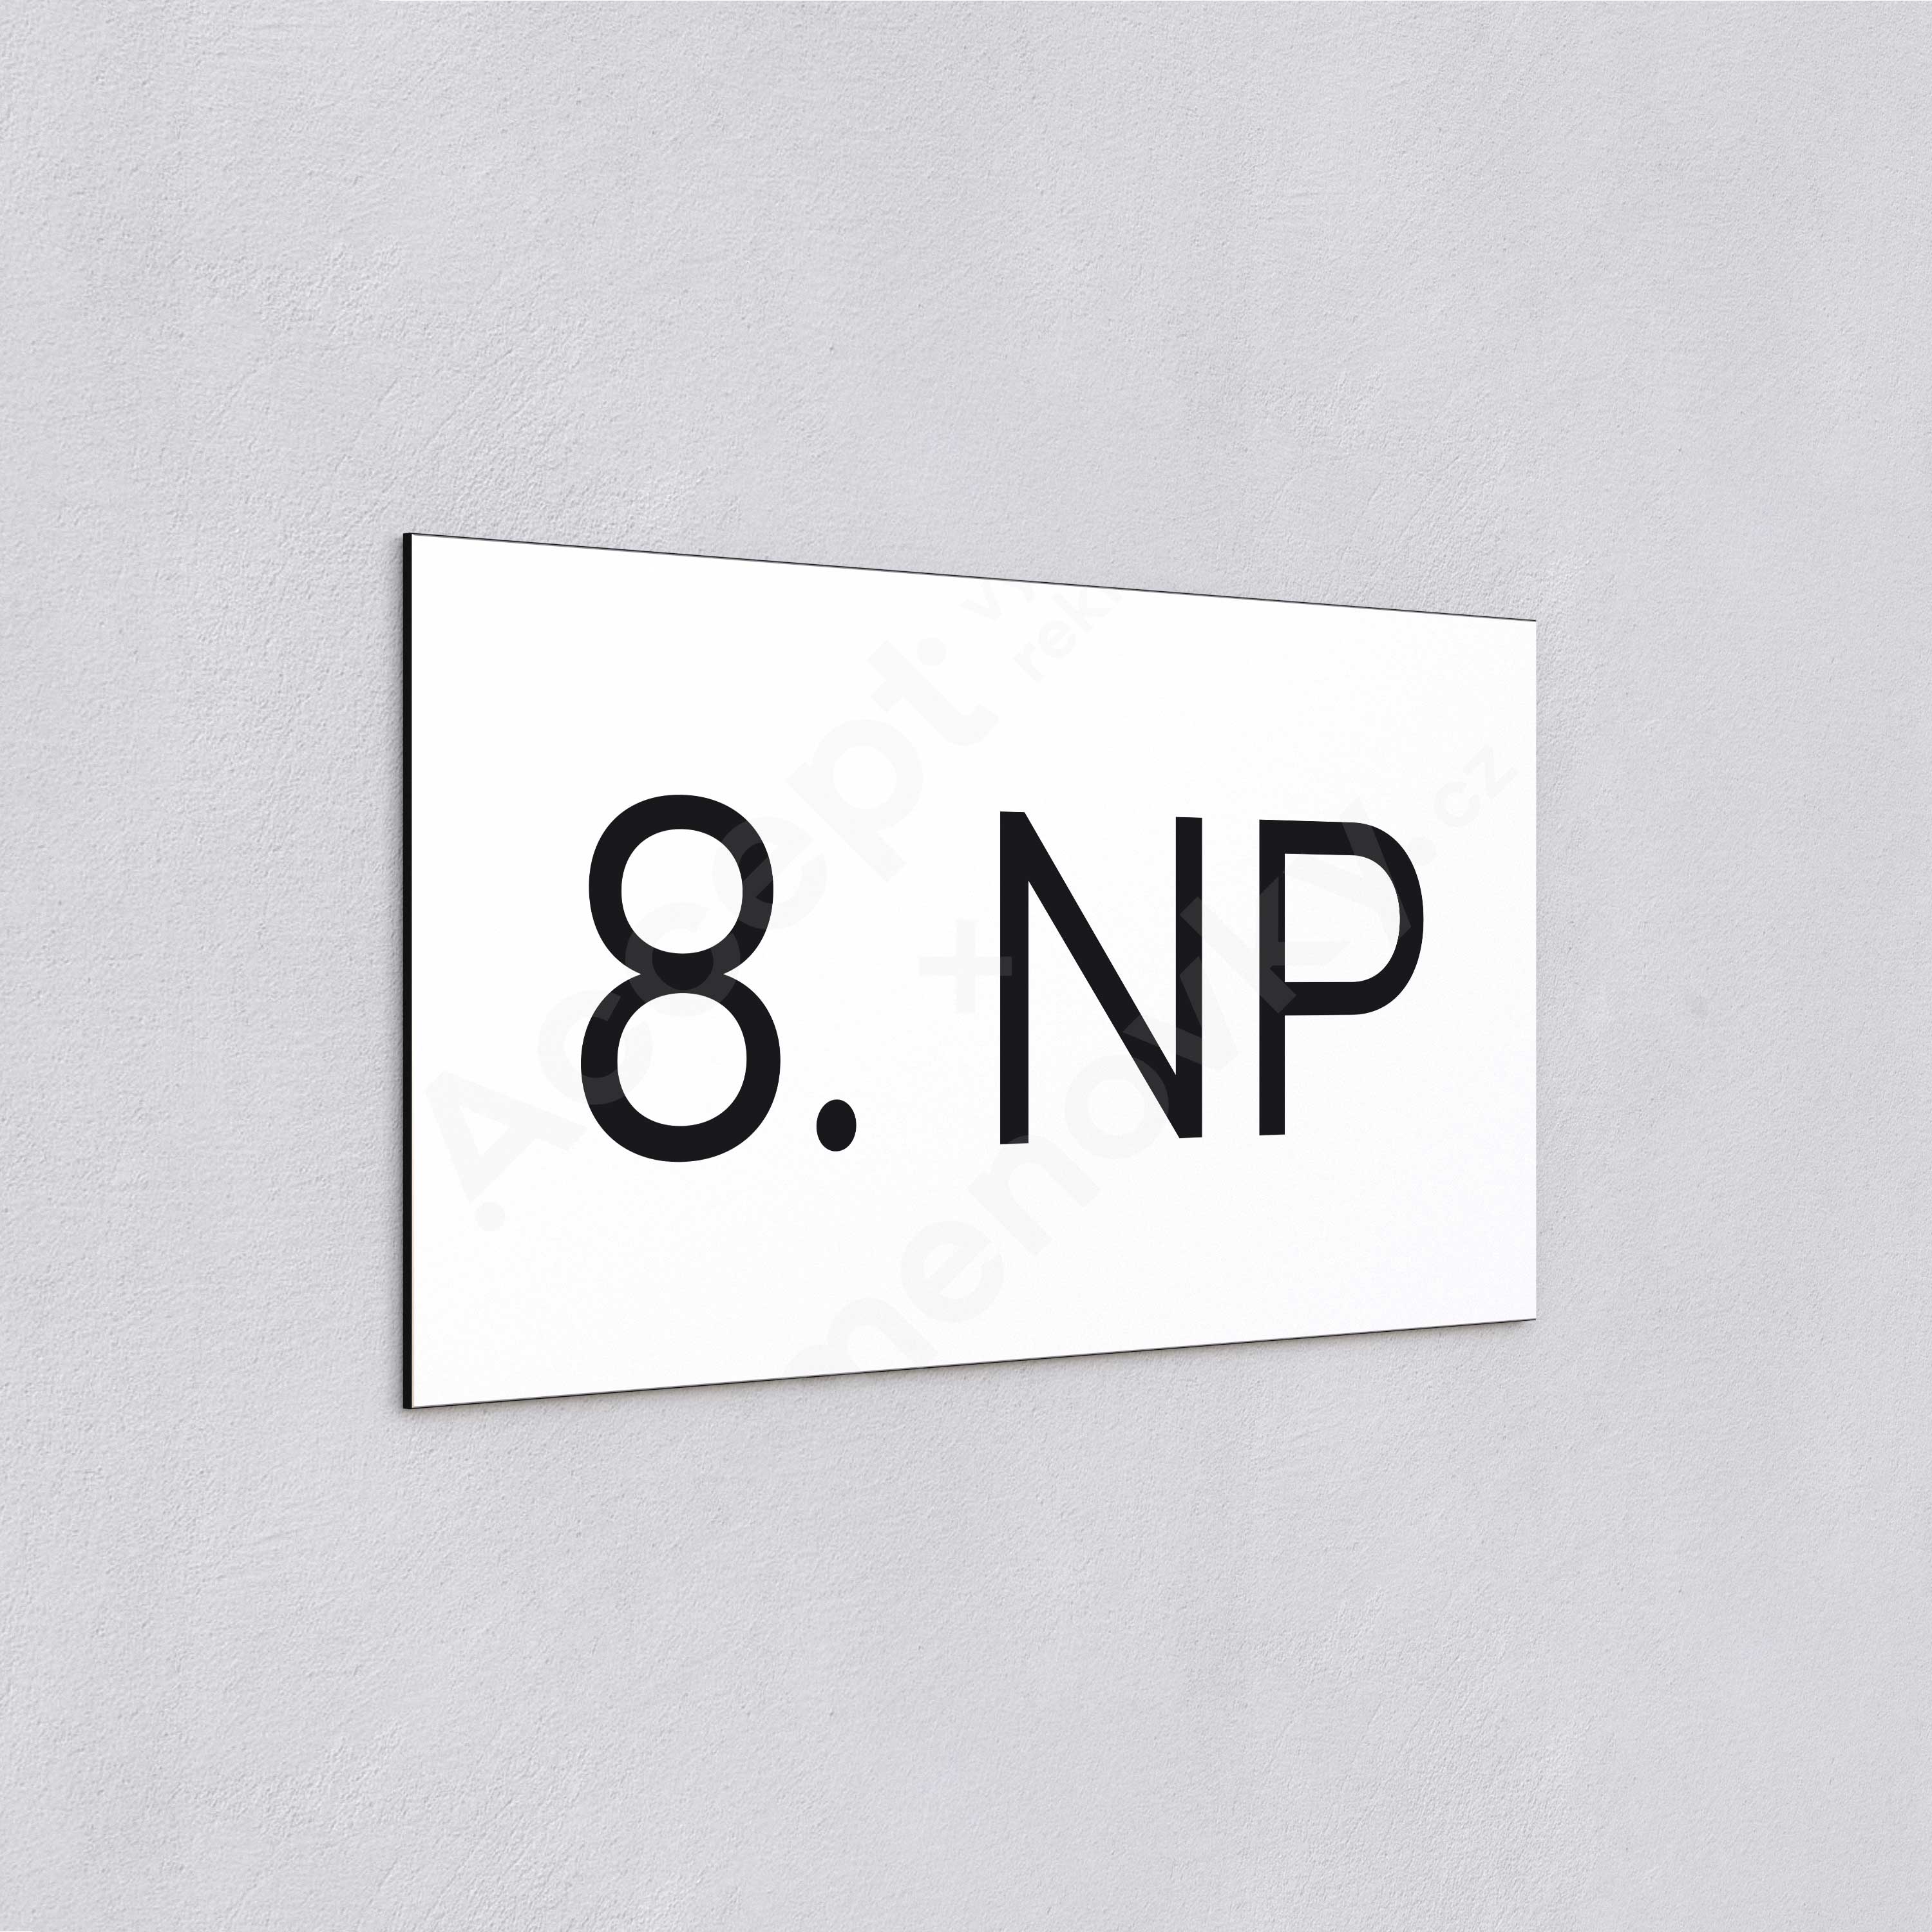 Označení podlaží "8. NP" - bílá tabulka - černý popis